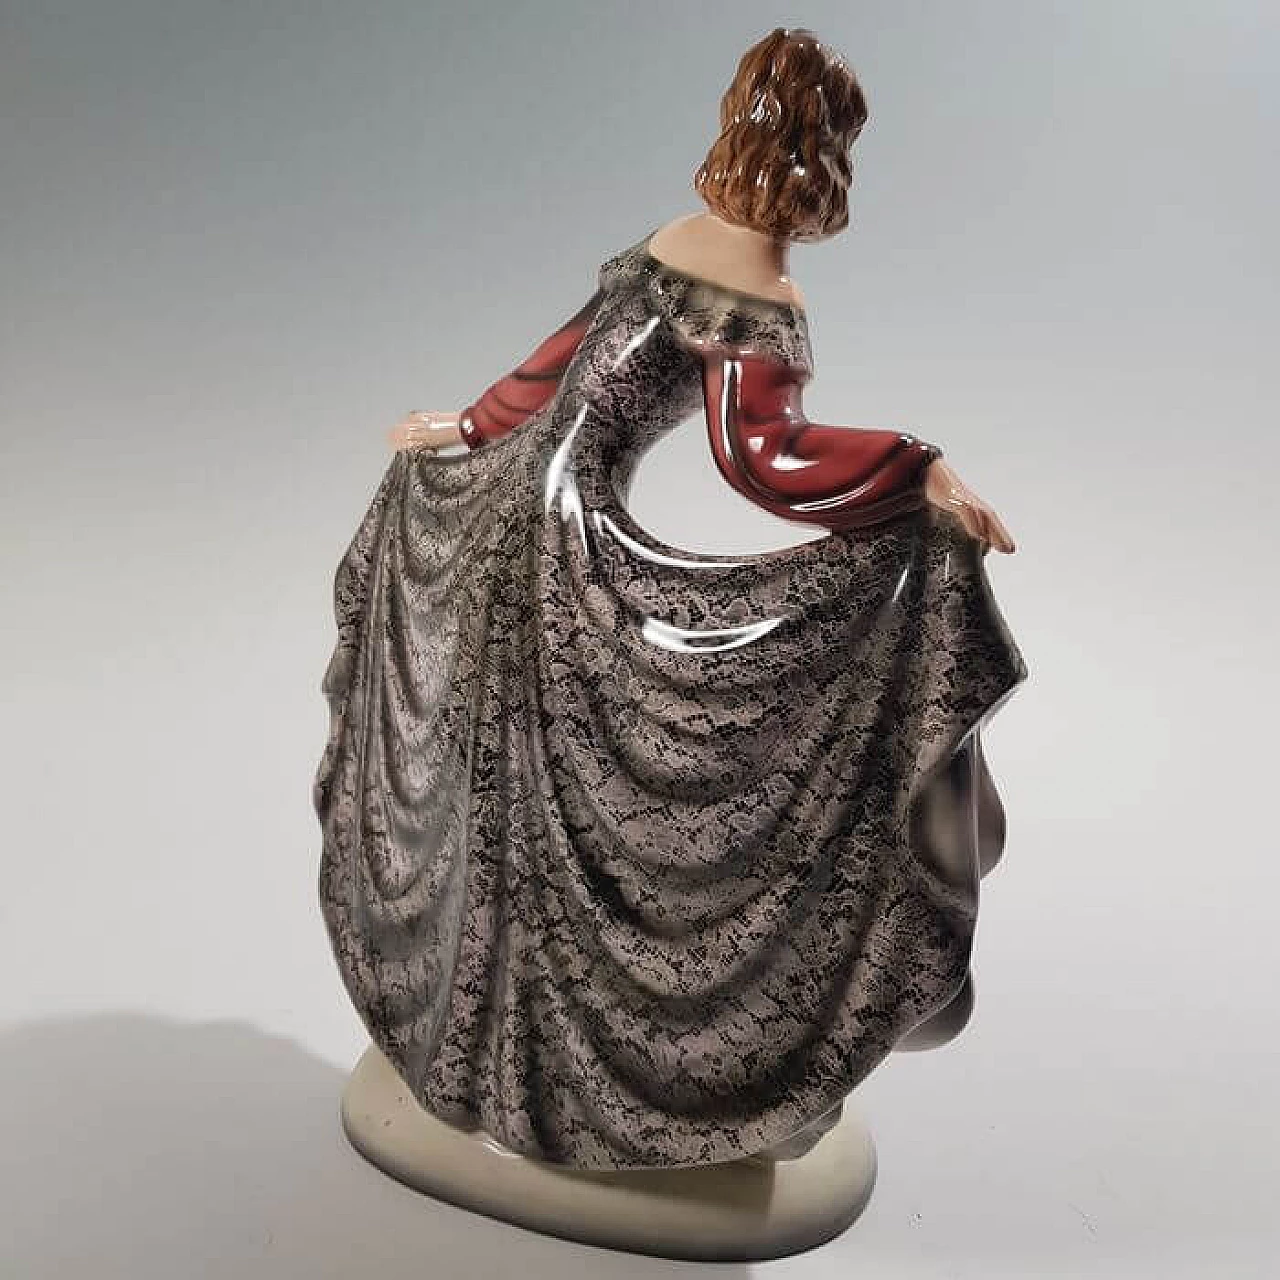 Goldscheider ceramic sculpture of a ballerina, 1920s 1